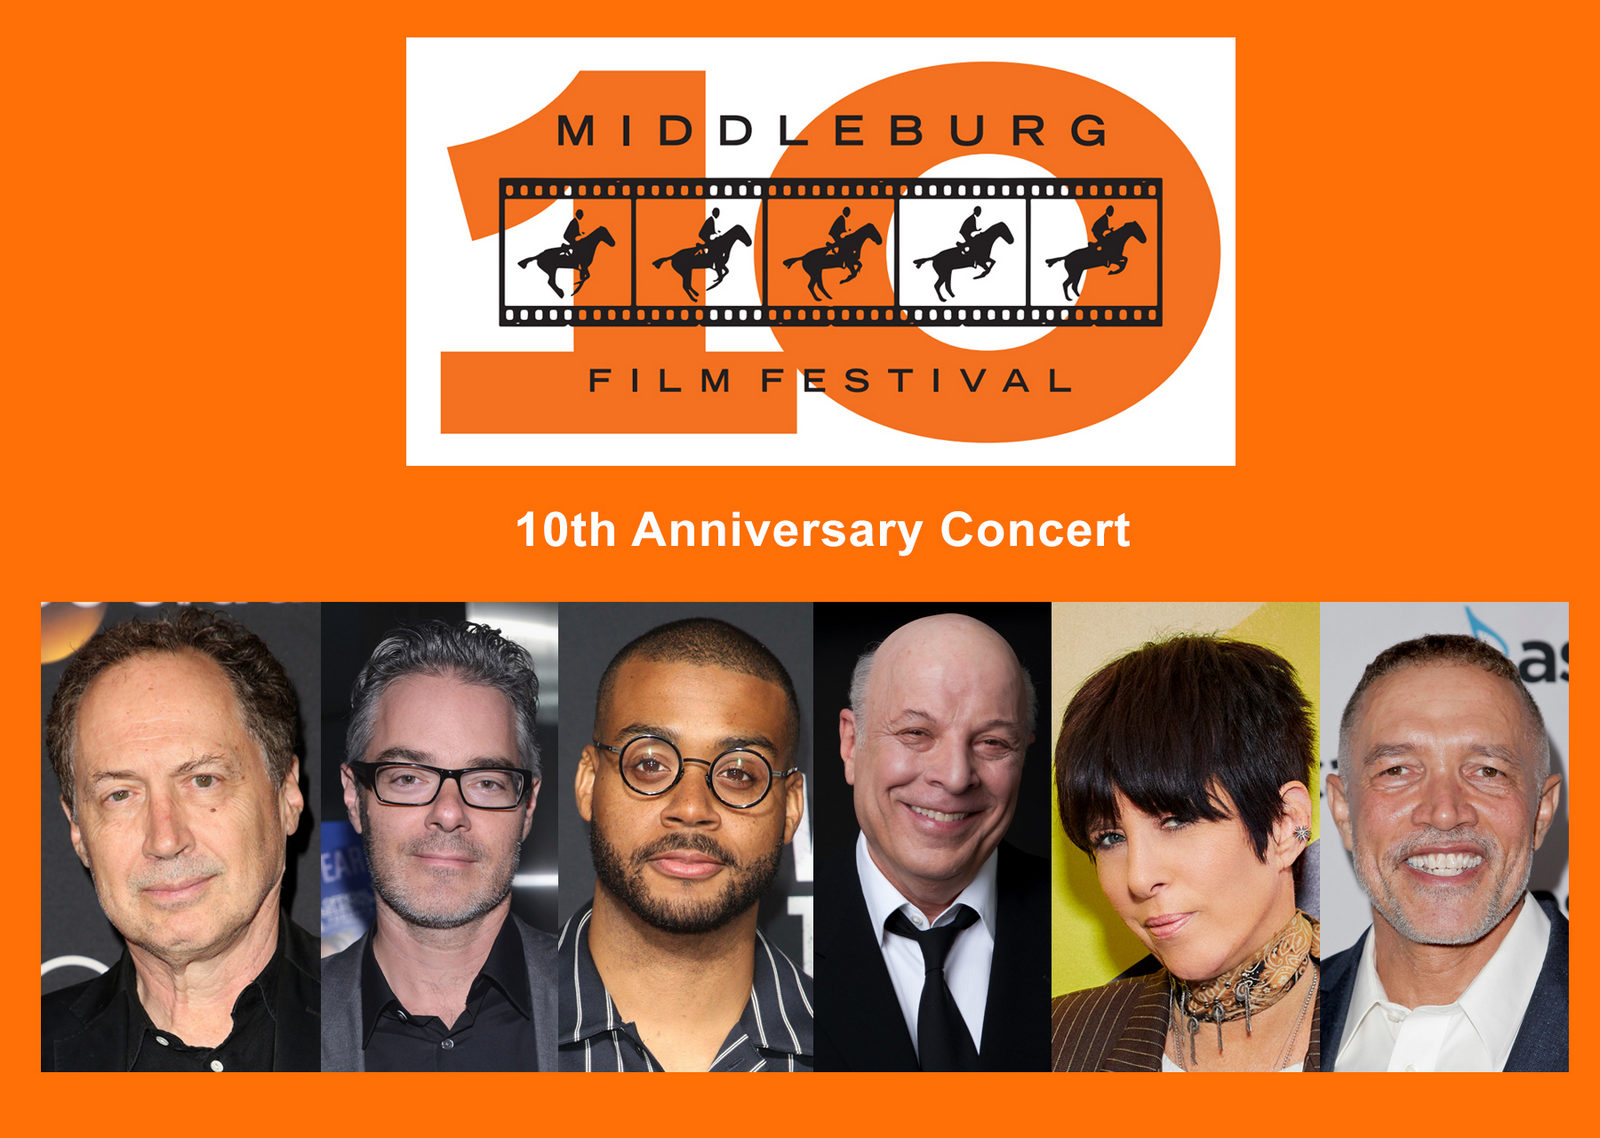 Middleburg Film Festival celebrates 10year anniversary concert